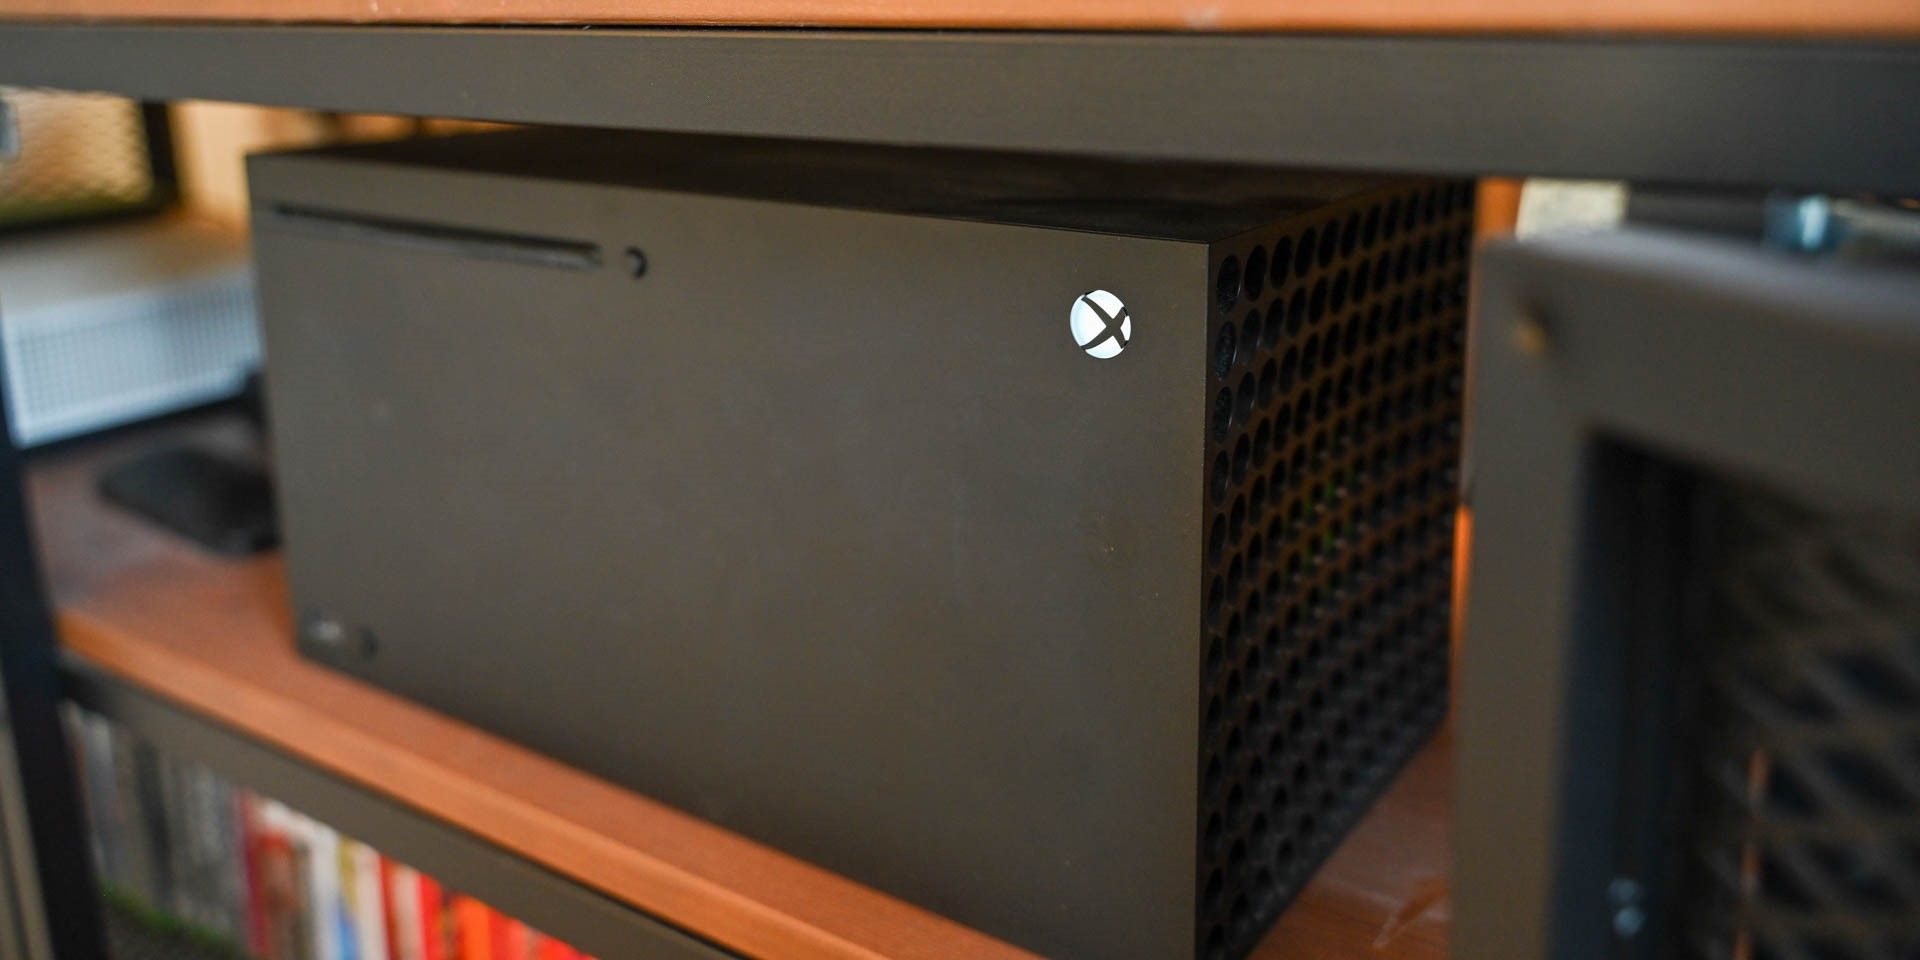 xbox series x on its side on a shelf